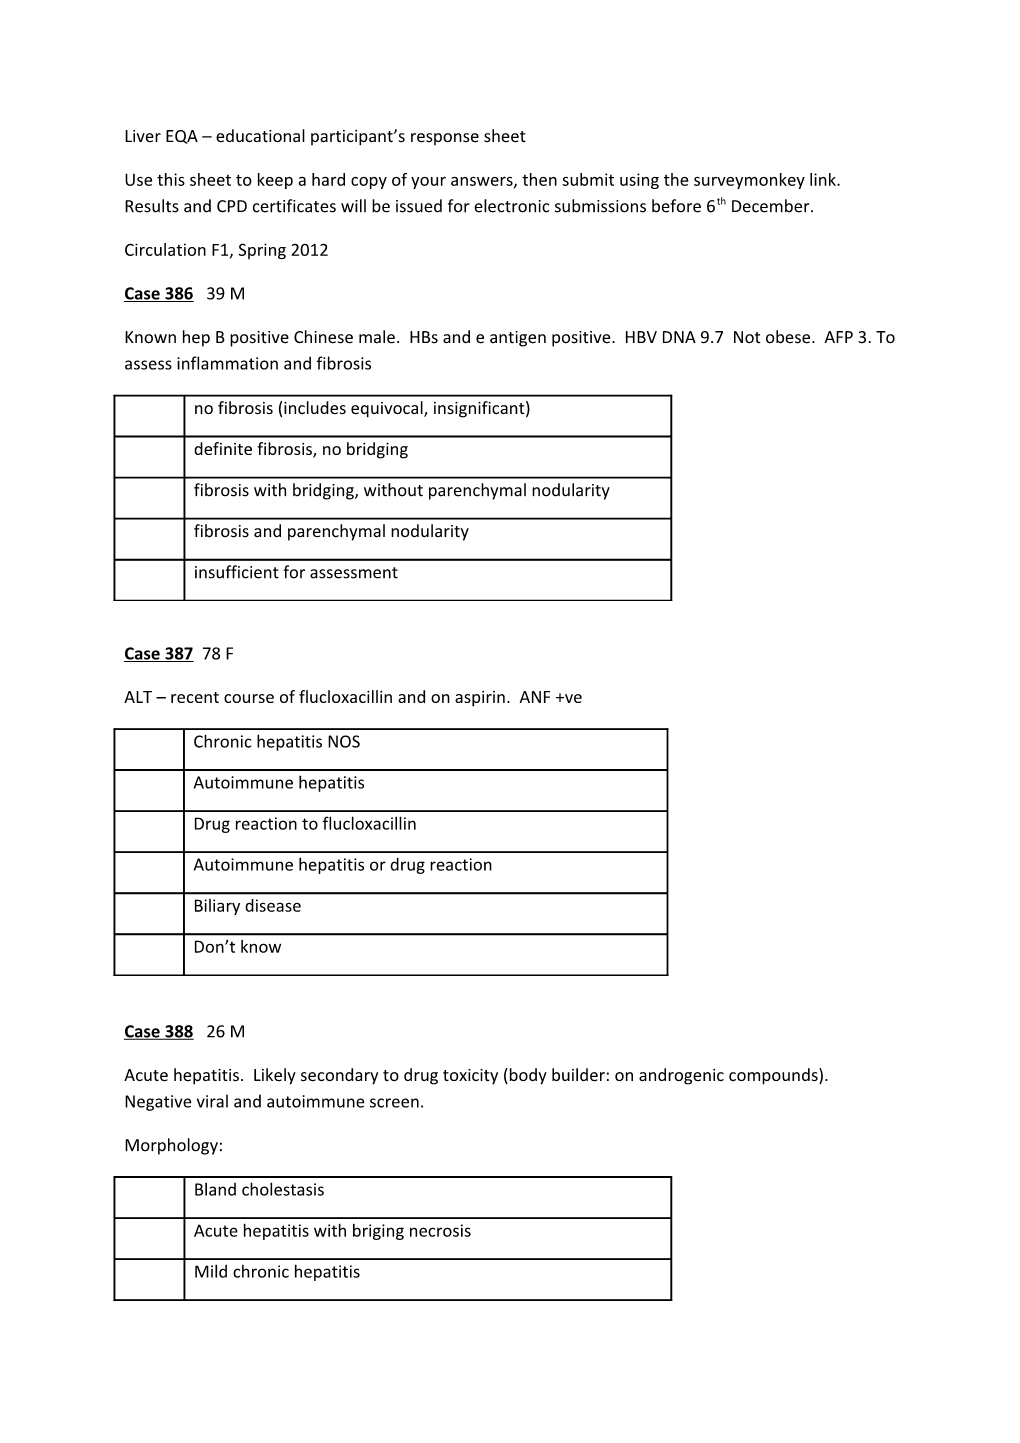 Liver EQA Educational Participant S Response Sheet